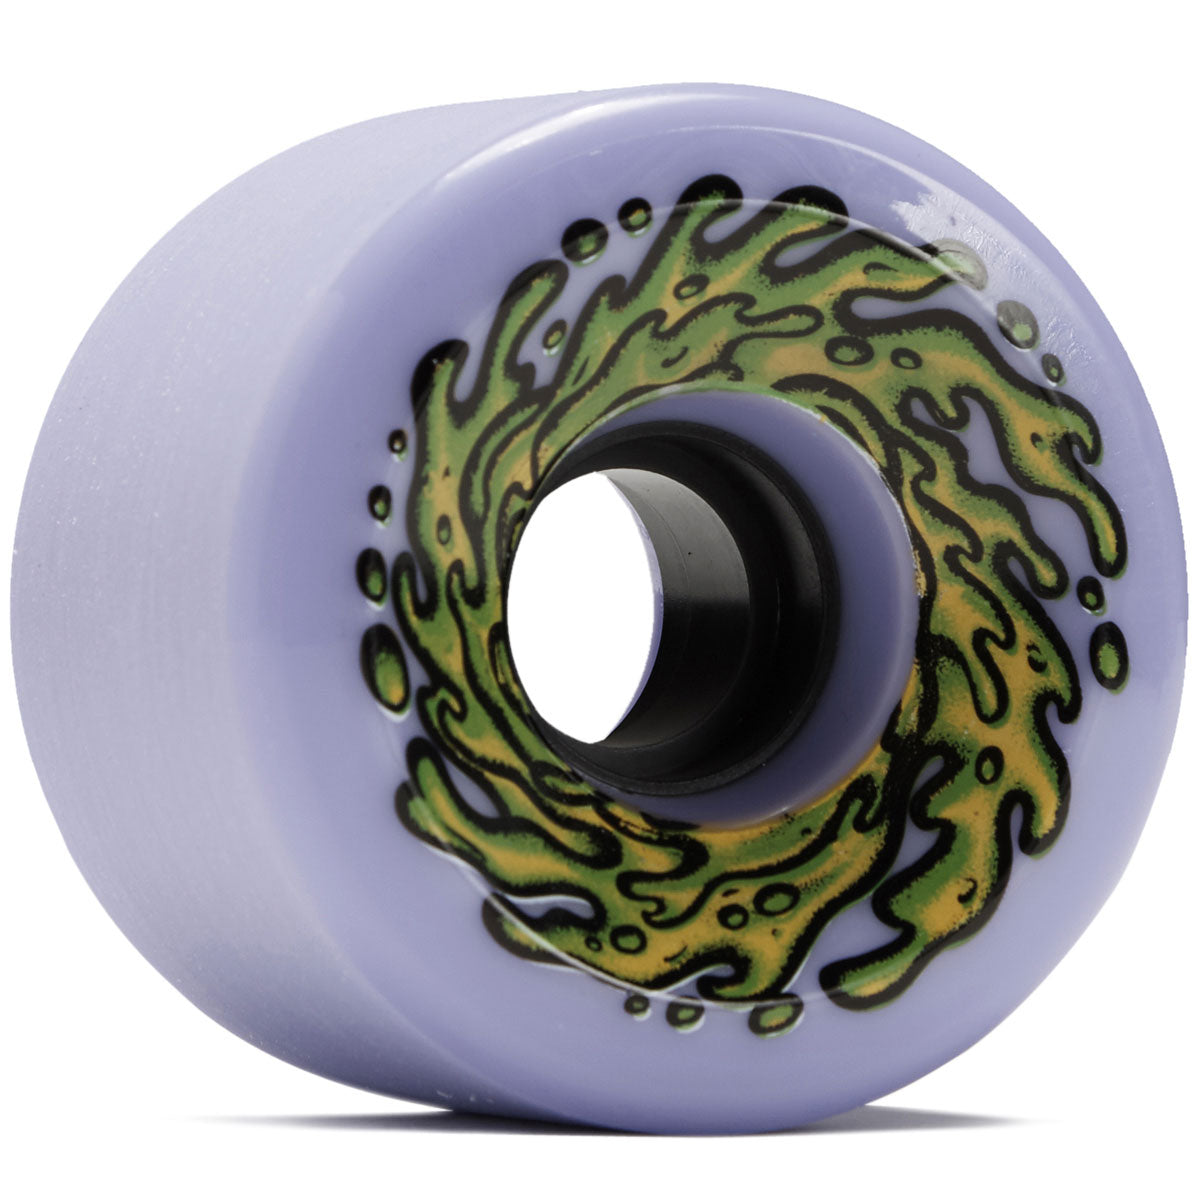 Slime Balls OG Slime 78a Skateboard Wheels - Purple - 66mm image 1